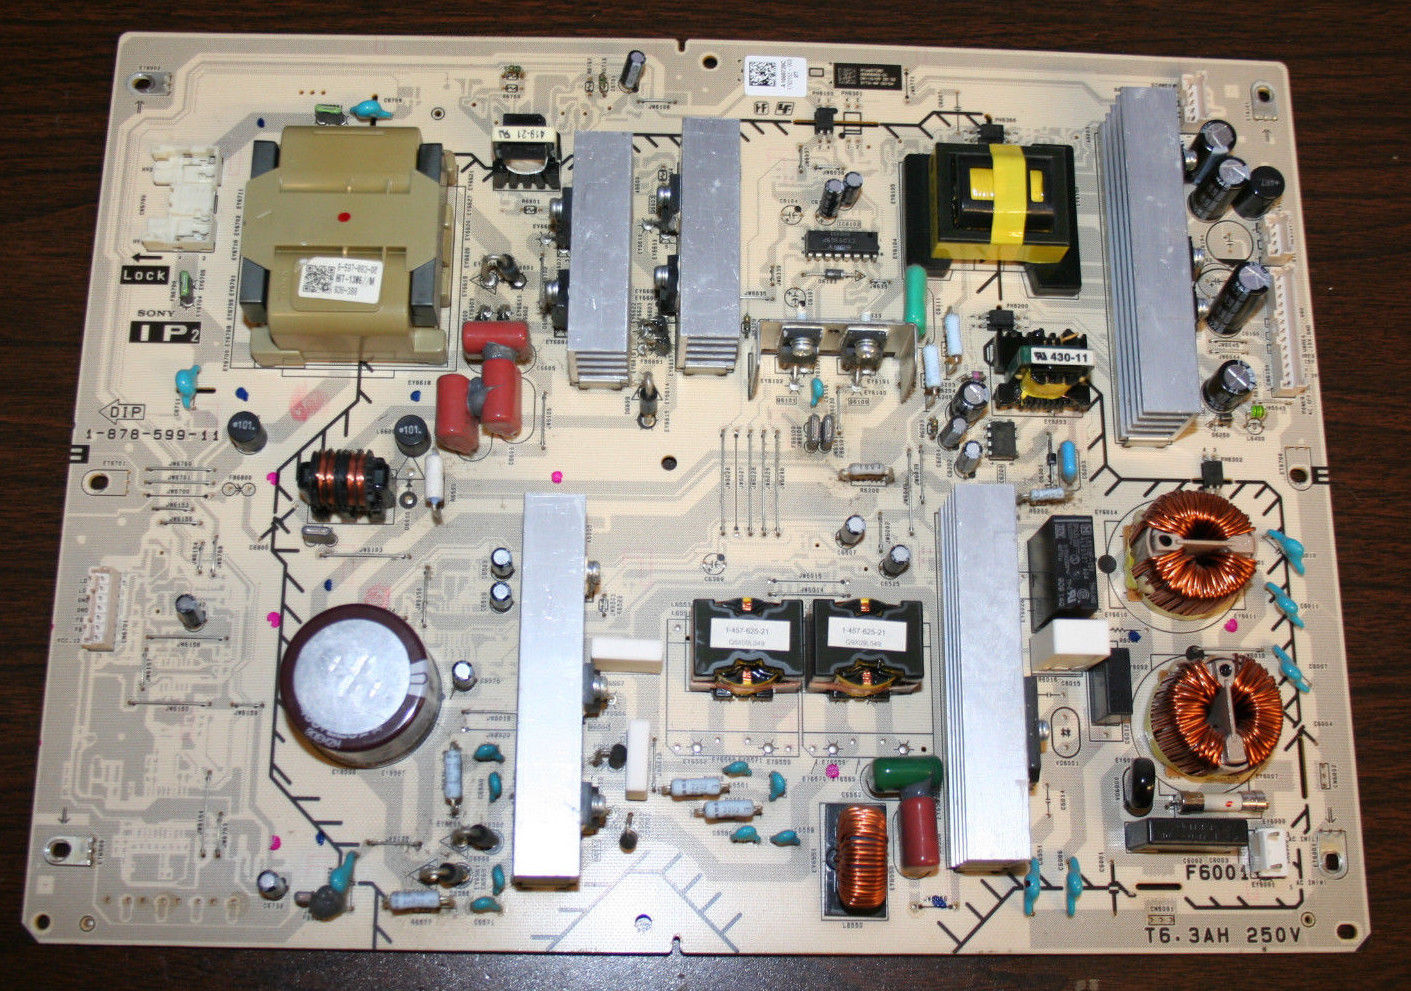 Sony KDL-46V5100 IP2 Power Supply Board A-1660-728-A 1-878-599-1